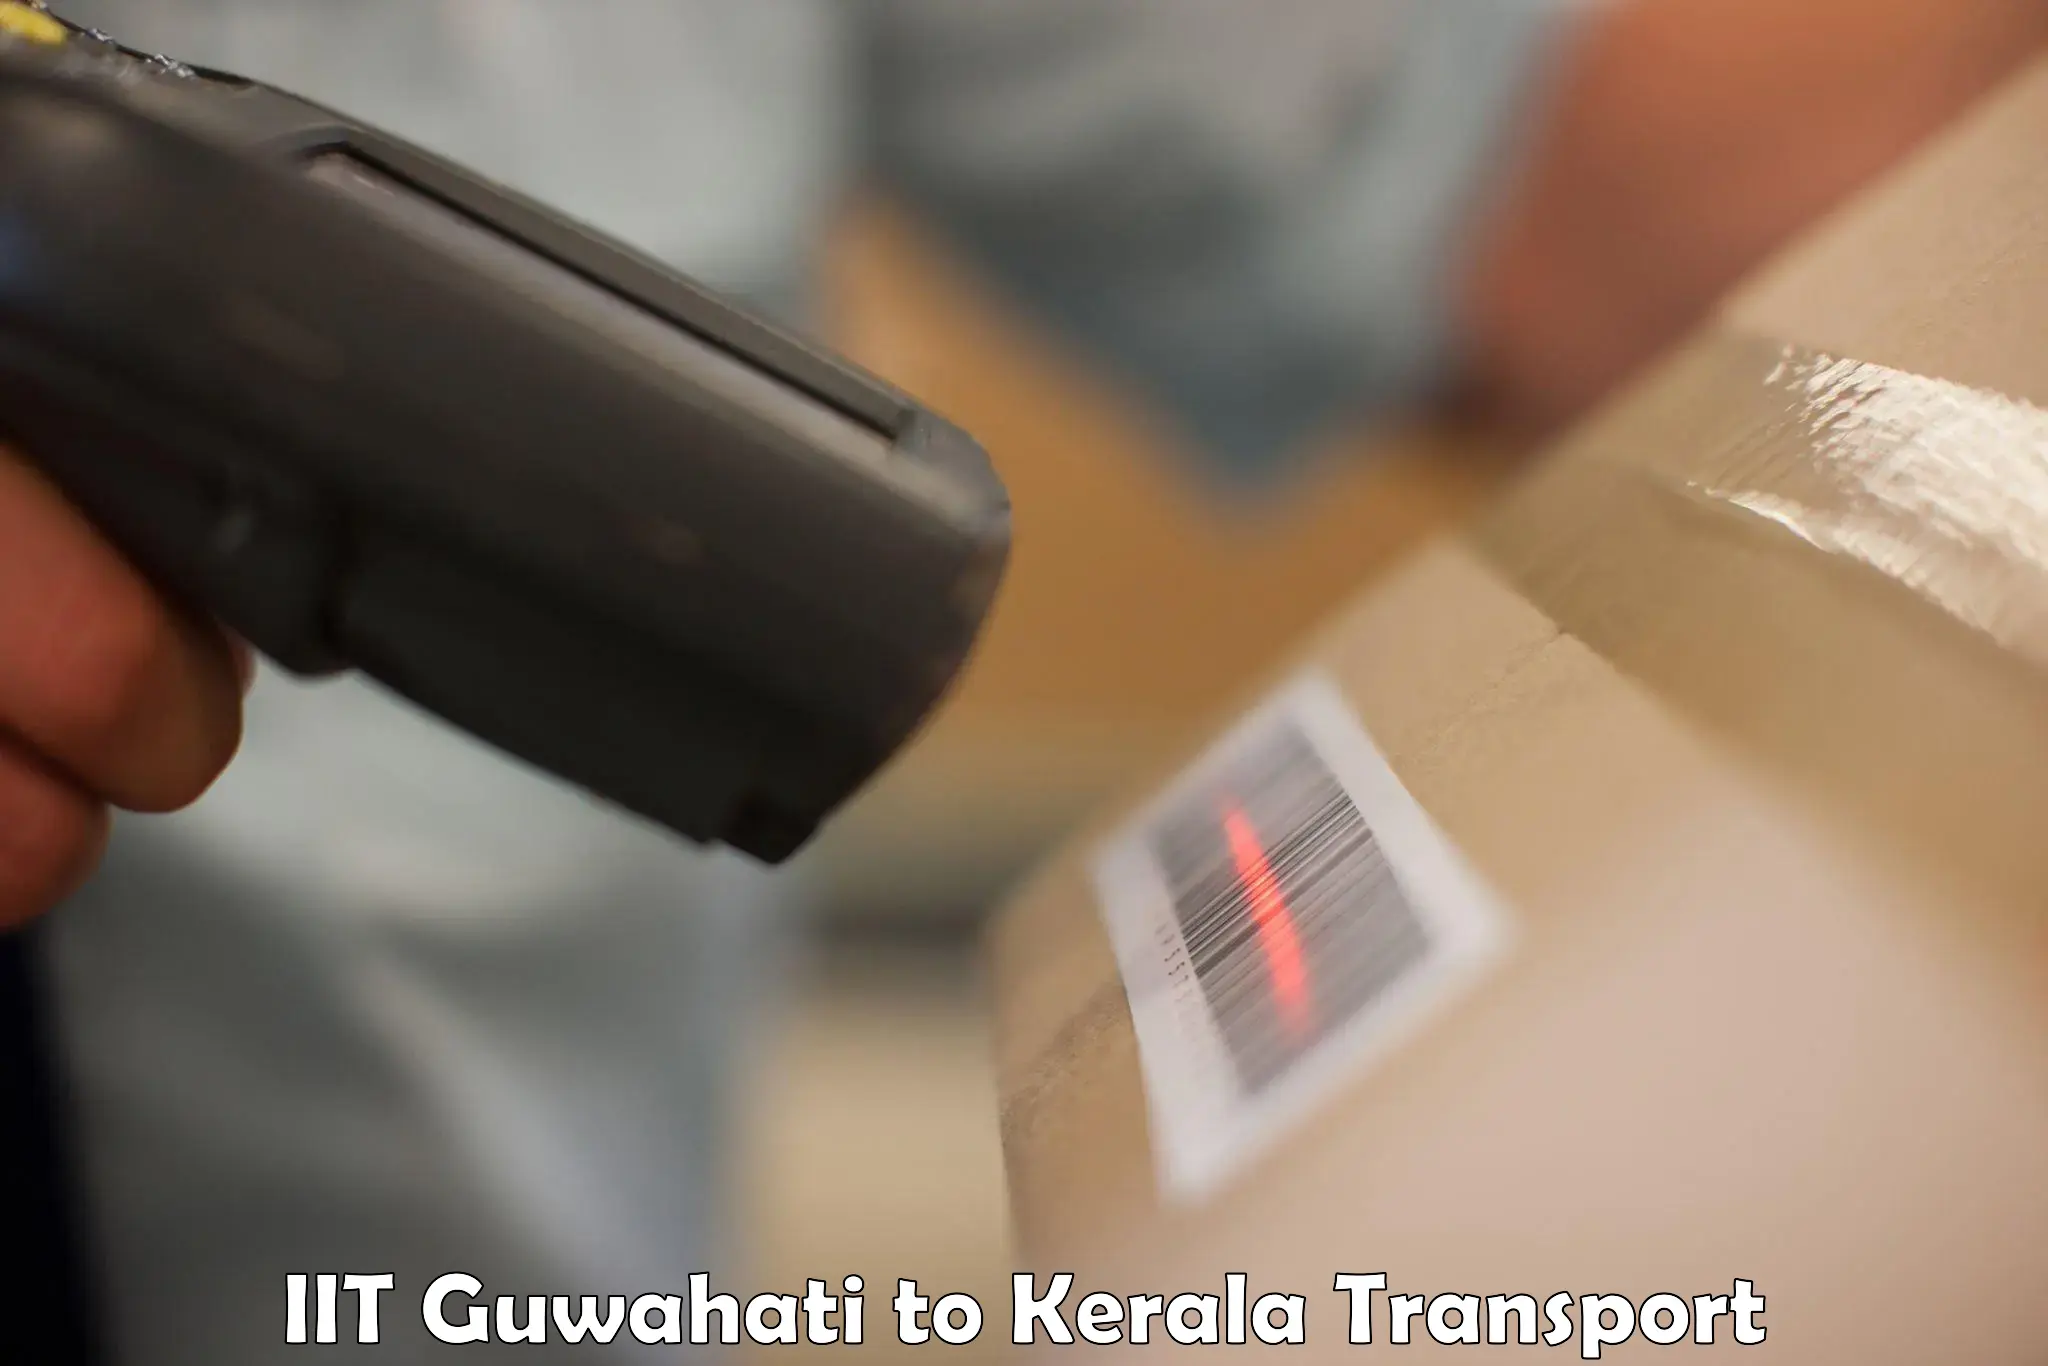 Delivery service IIT Guwahati to Kanhangad